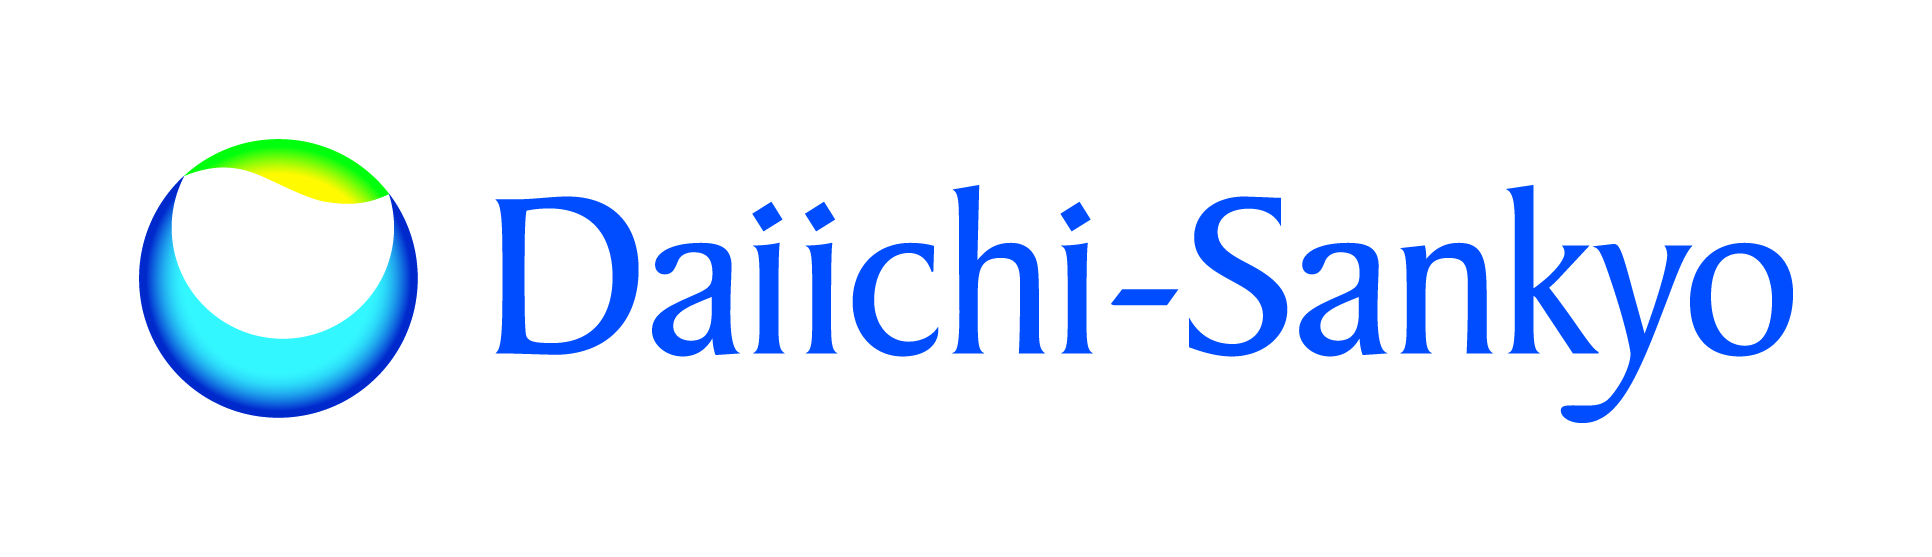 Daichii